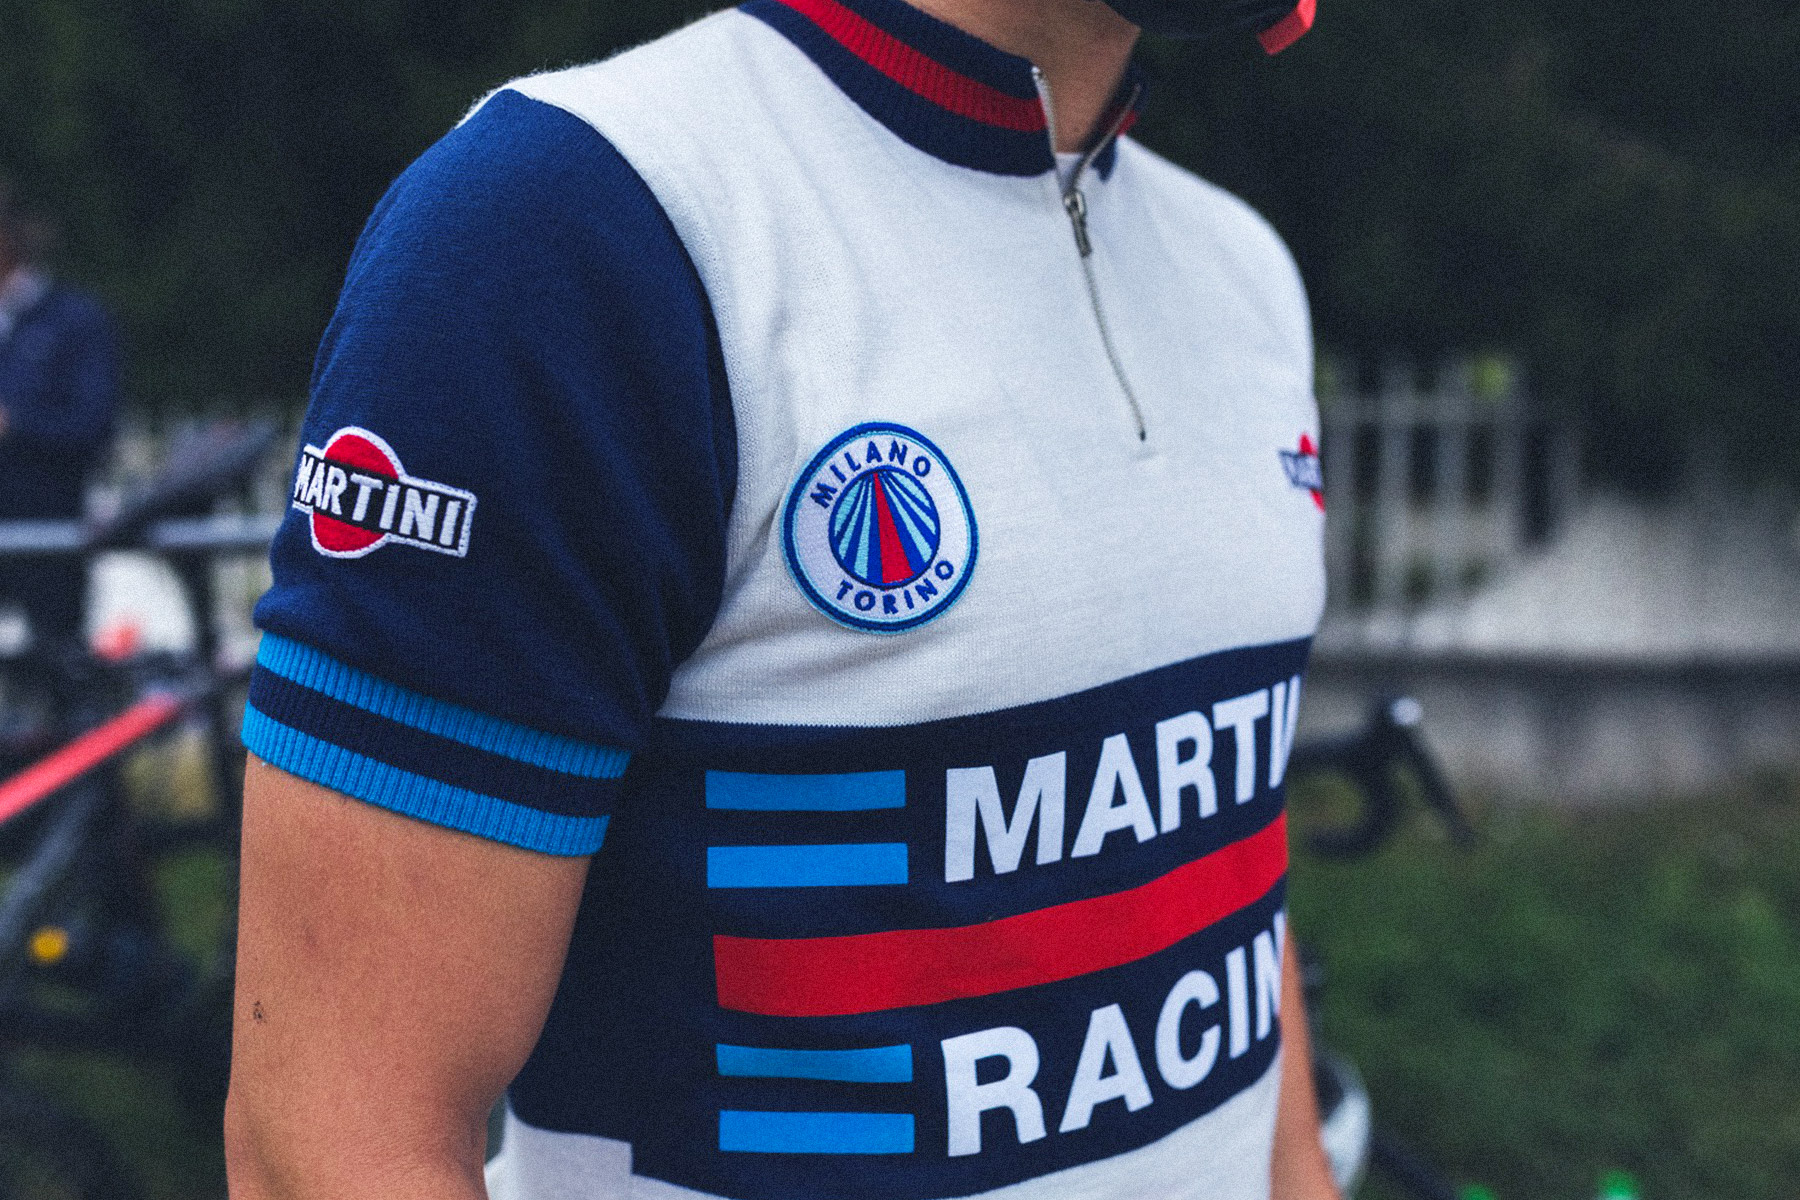 martini racing cycling jersey